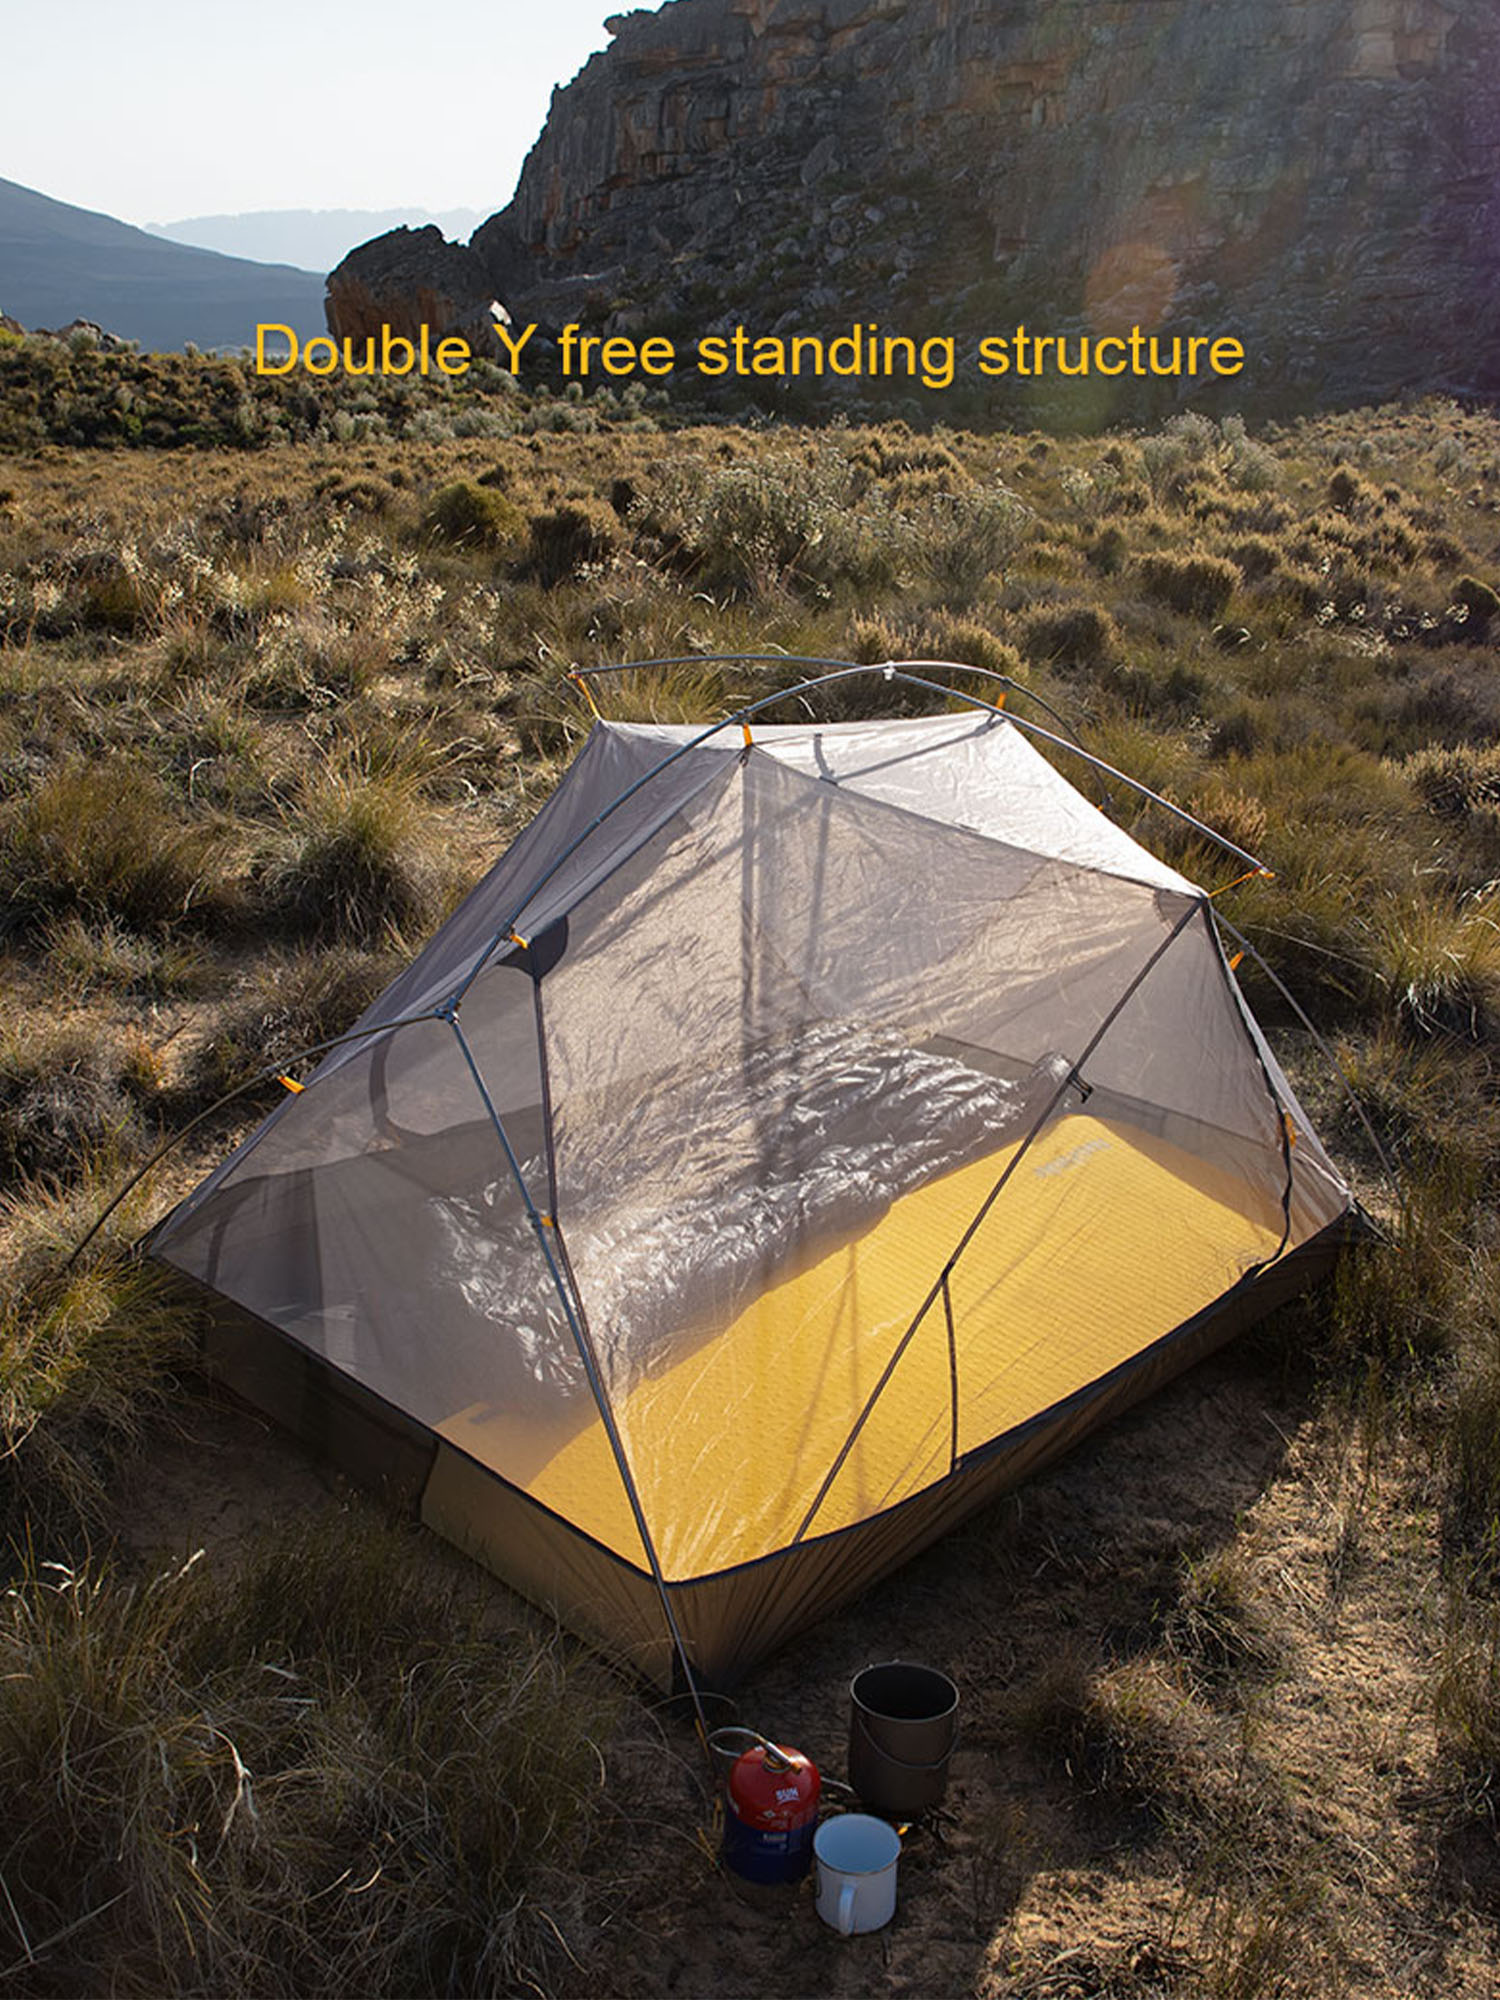 Палатка Naturehike Mongar Ultralight 2 Man Tent Purple